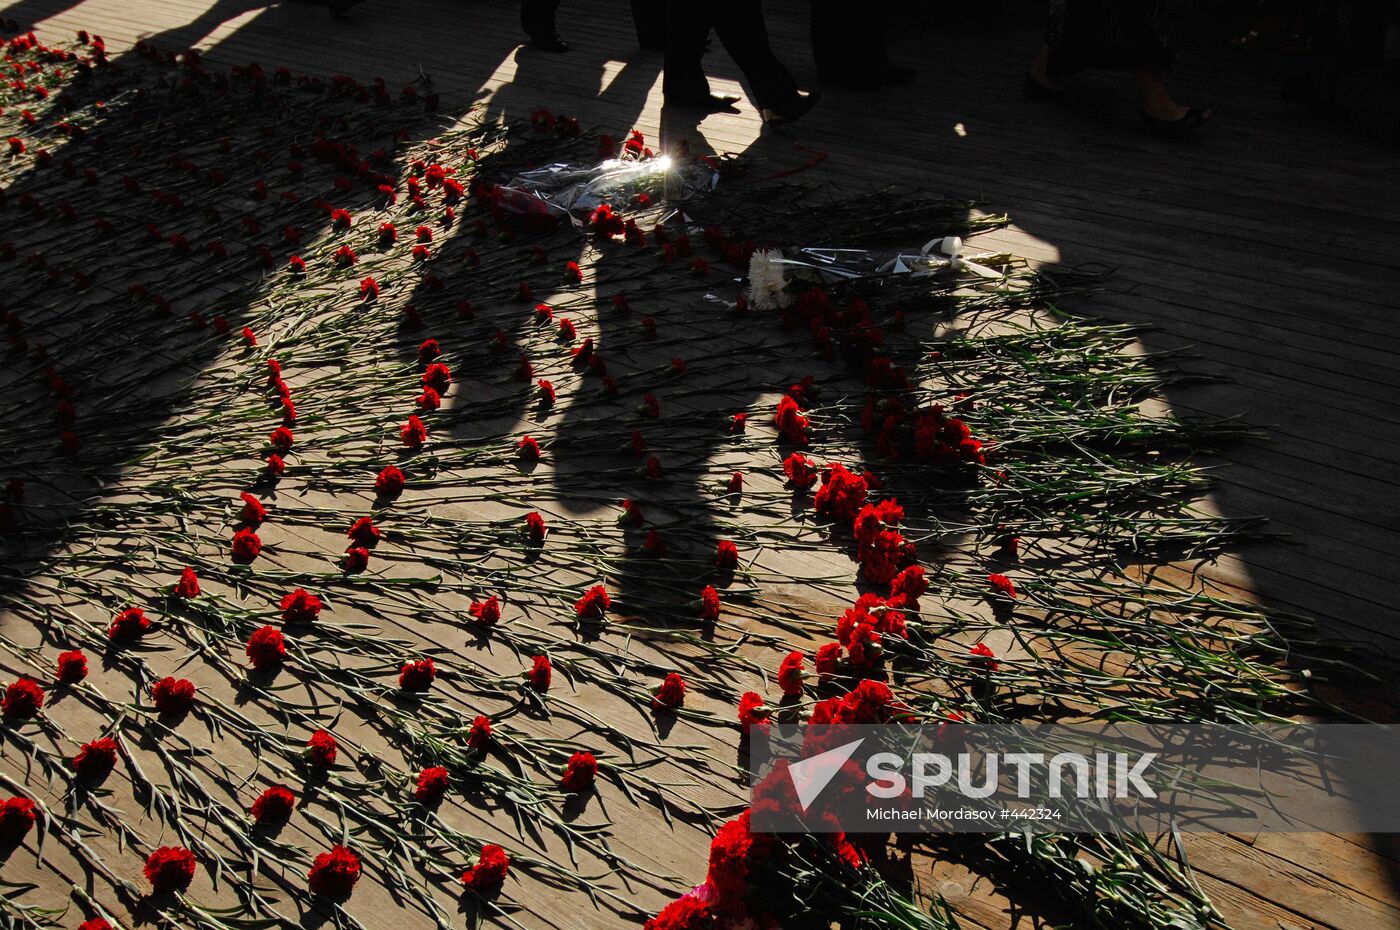 Commemoration of Beslan tragedy